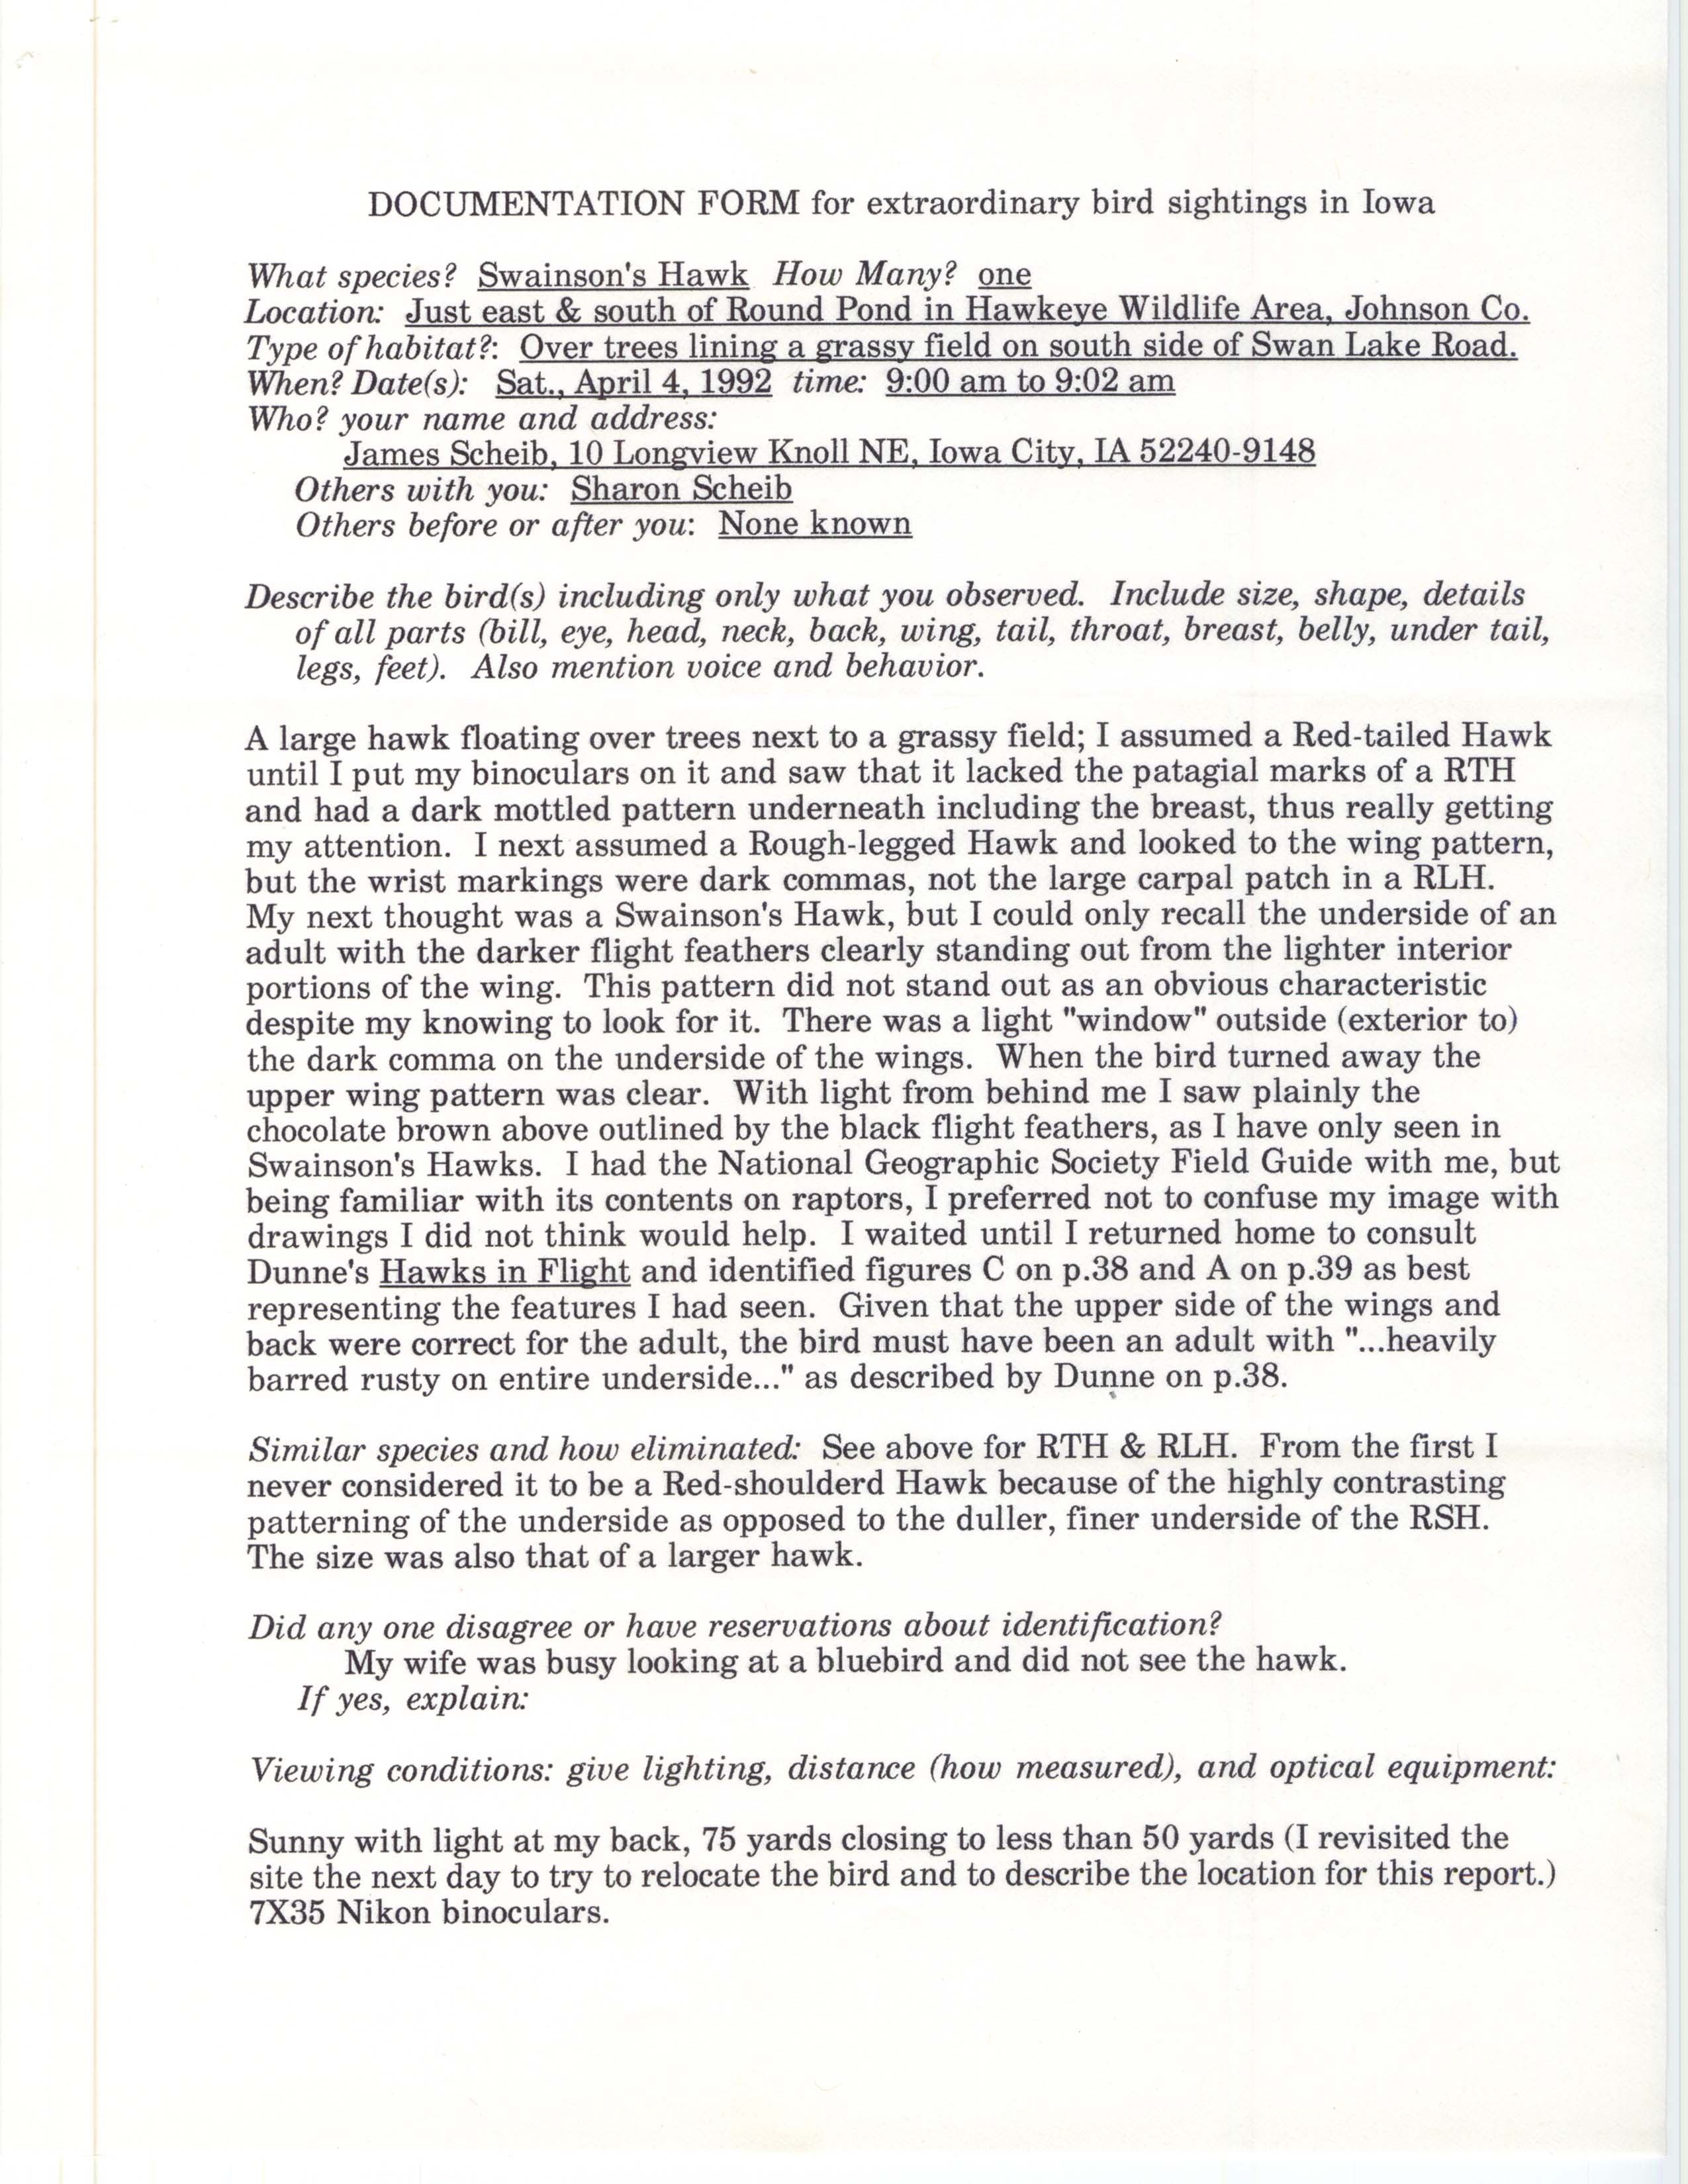 Rare bird documentation form for Swainson's Hawk at Hawkeye Wildlife Area, 1992